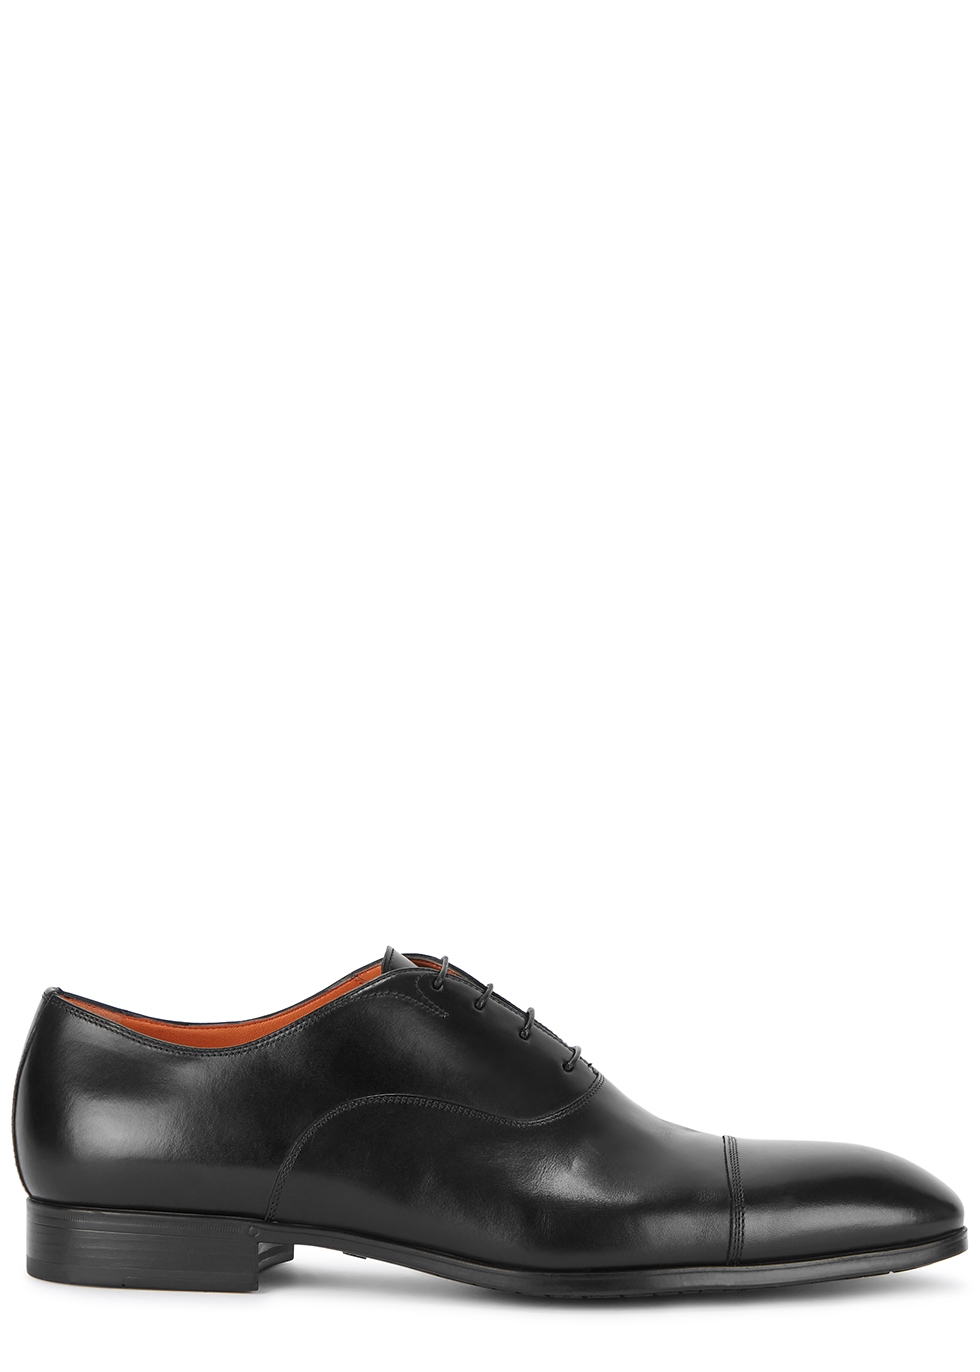 Santoni Black leather Oxford shoes - Harvey Nichols